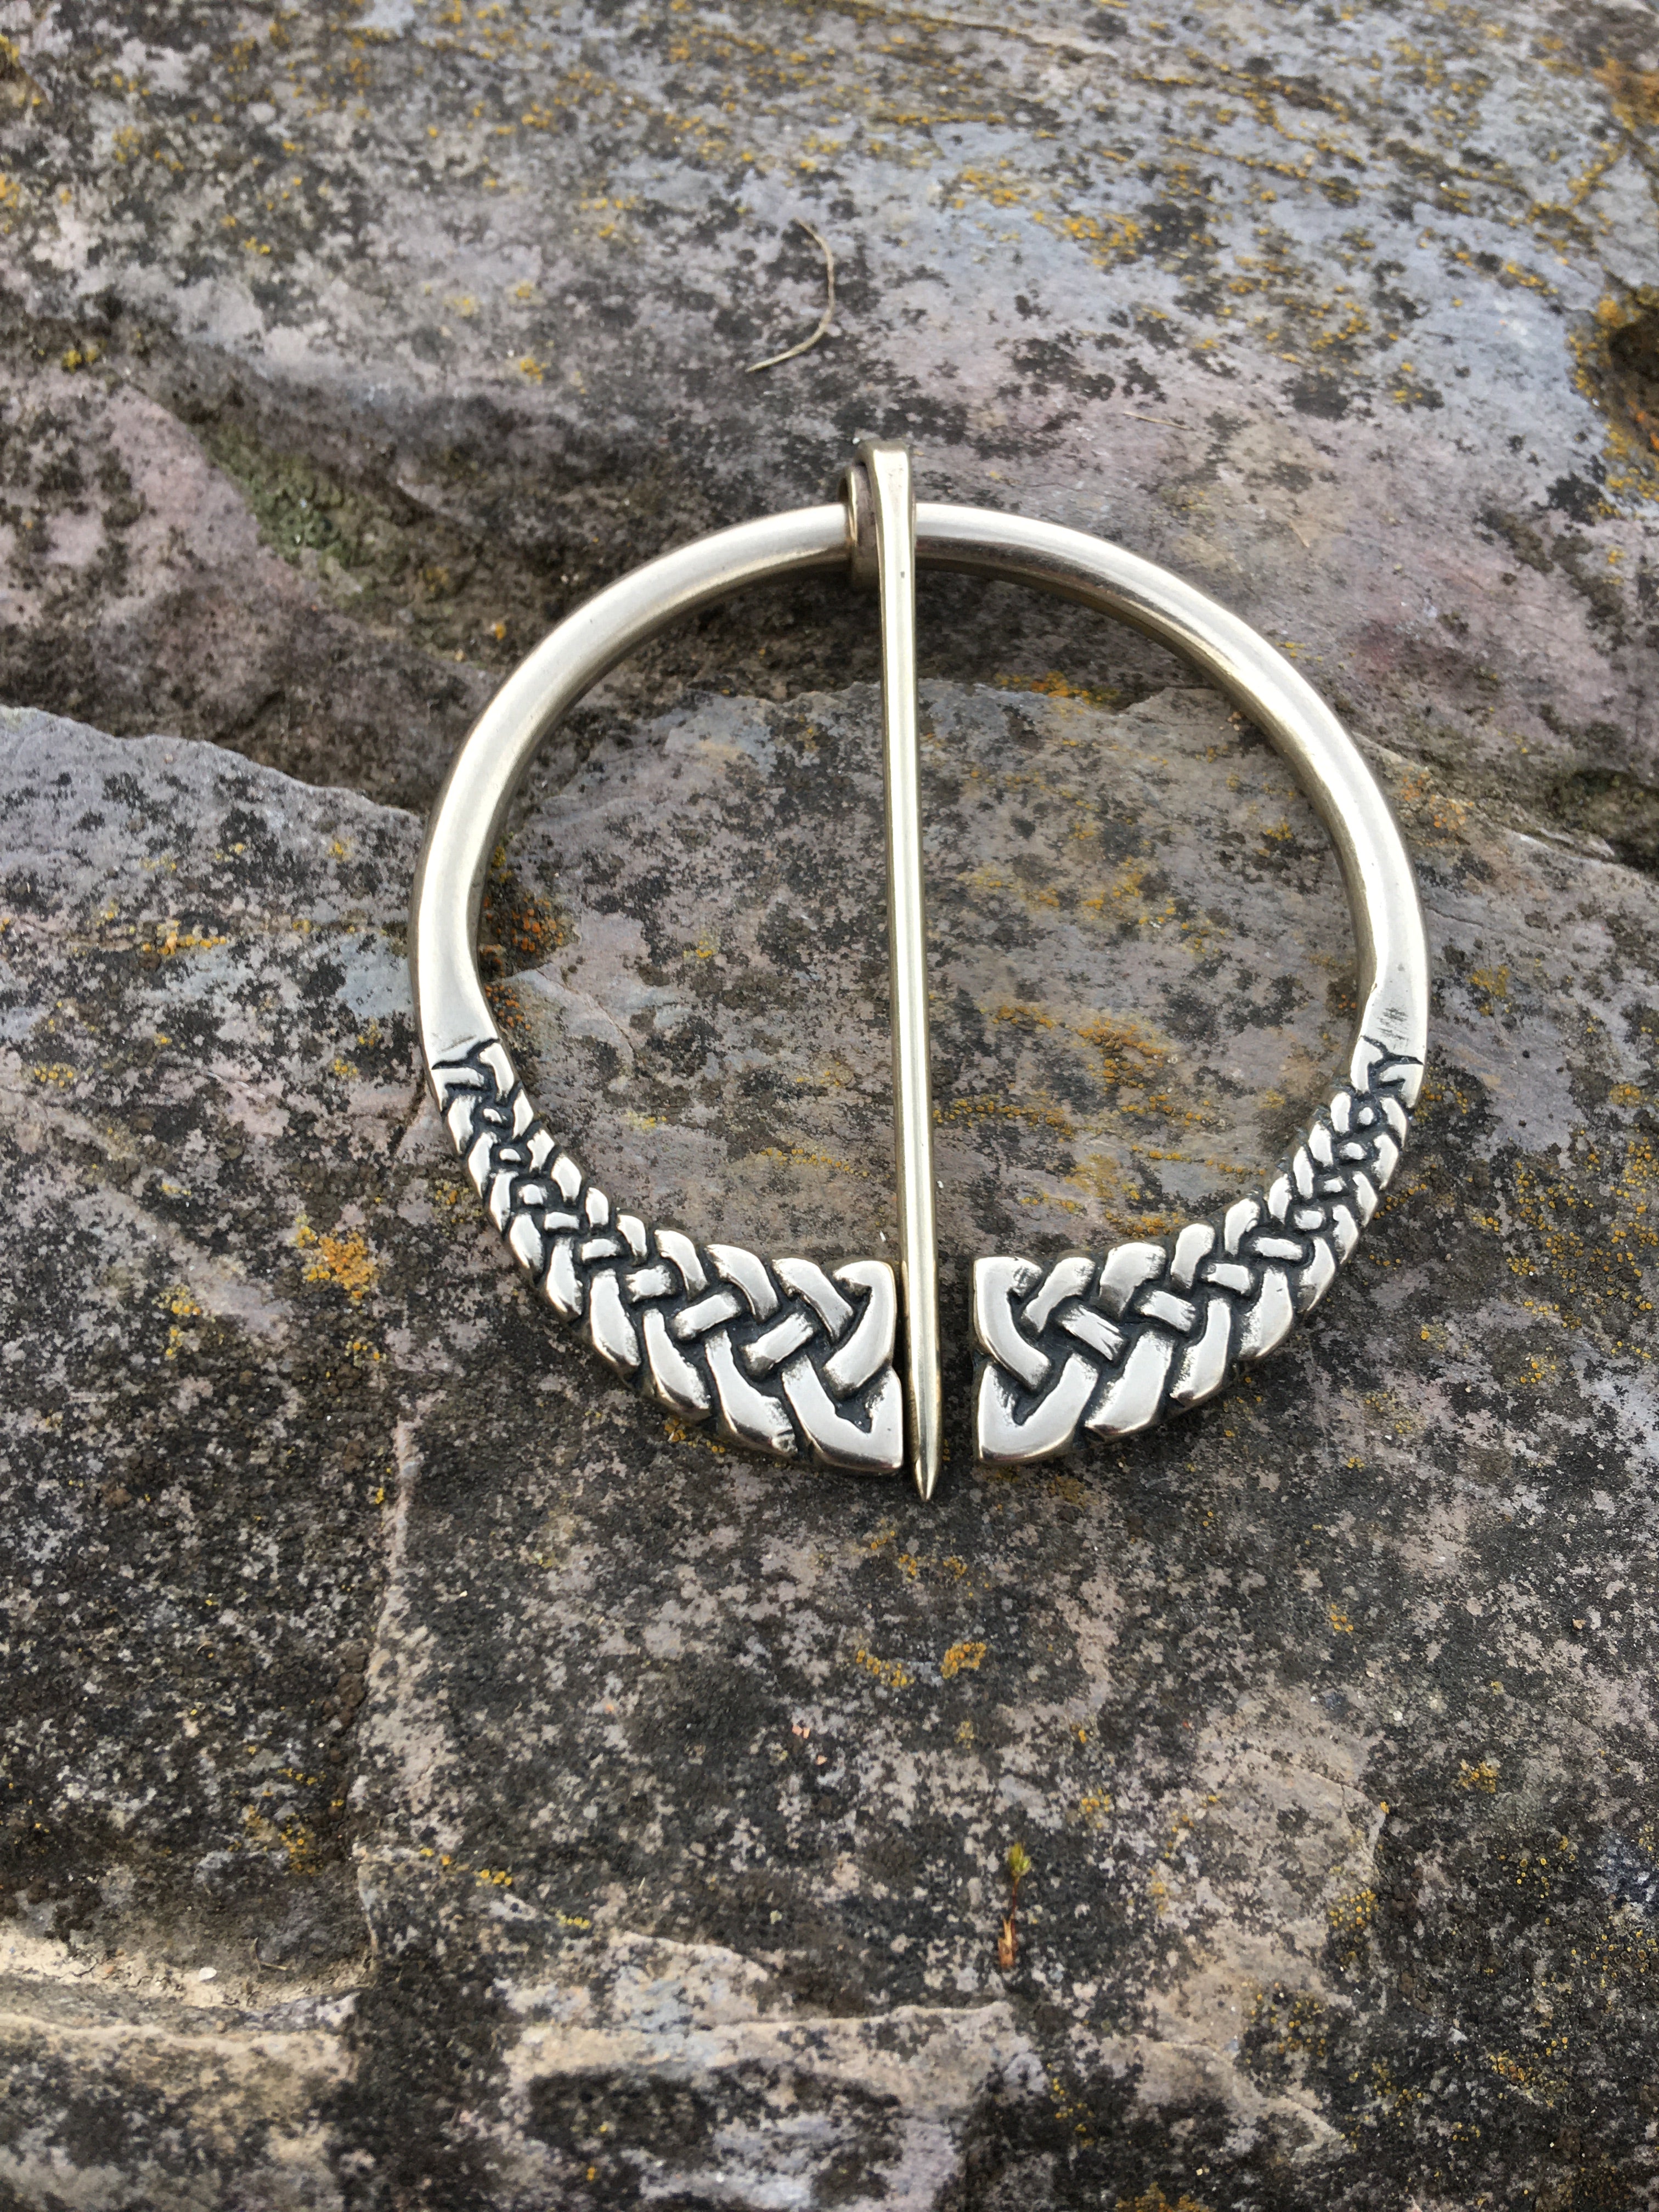 Celtic Knotwork Shawl Pin~single knots